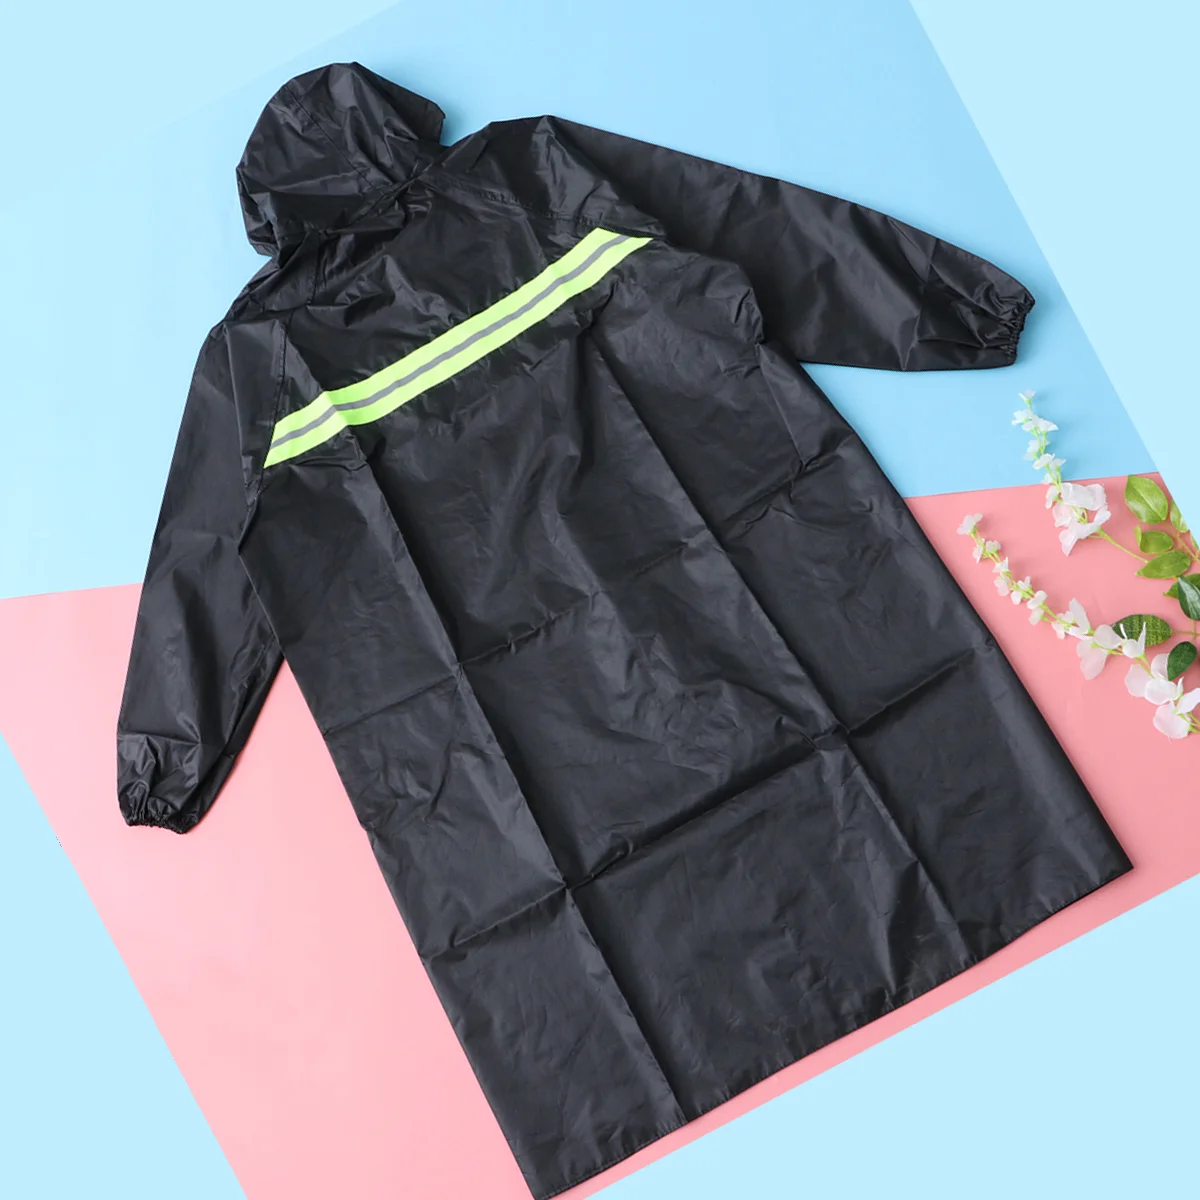 

1 Pc Thick Windbreaker Raincoat Long Labor Insurance Raincoat Waterproof Hooded with Reflective Strips Rainwear-XXXXL(Black)